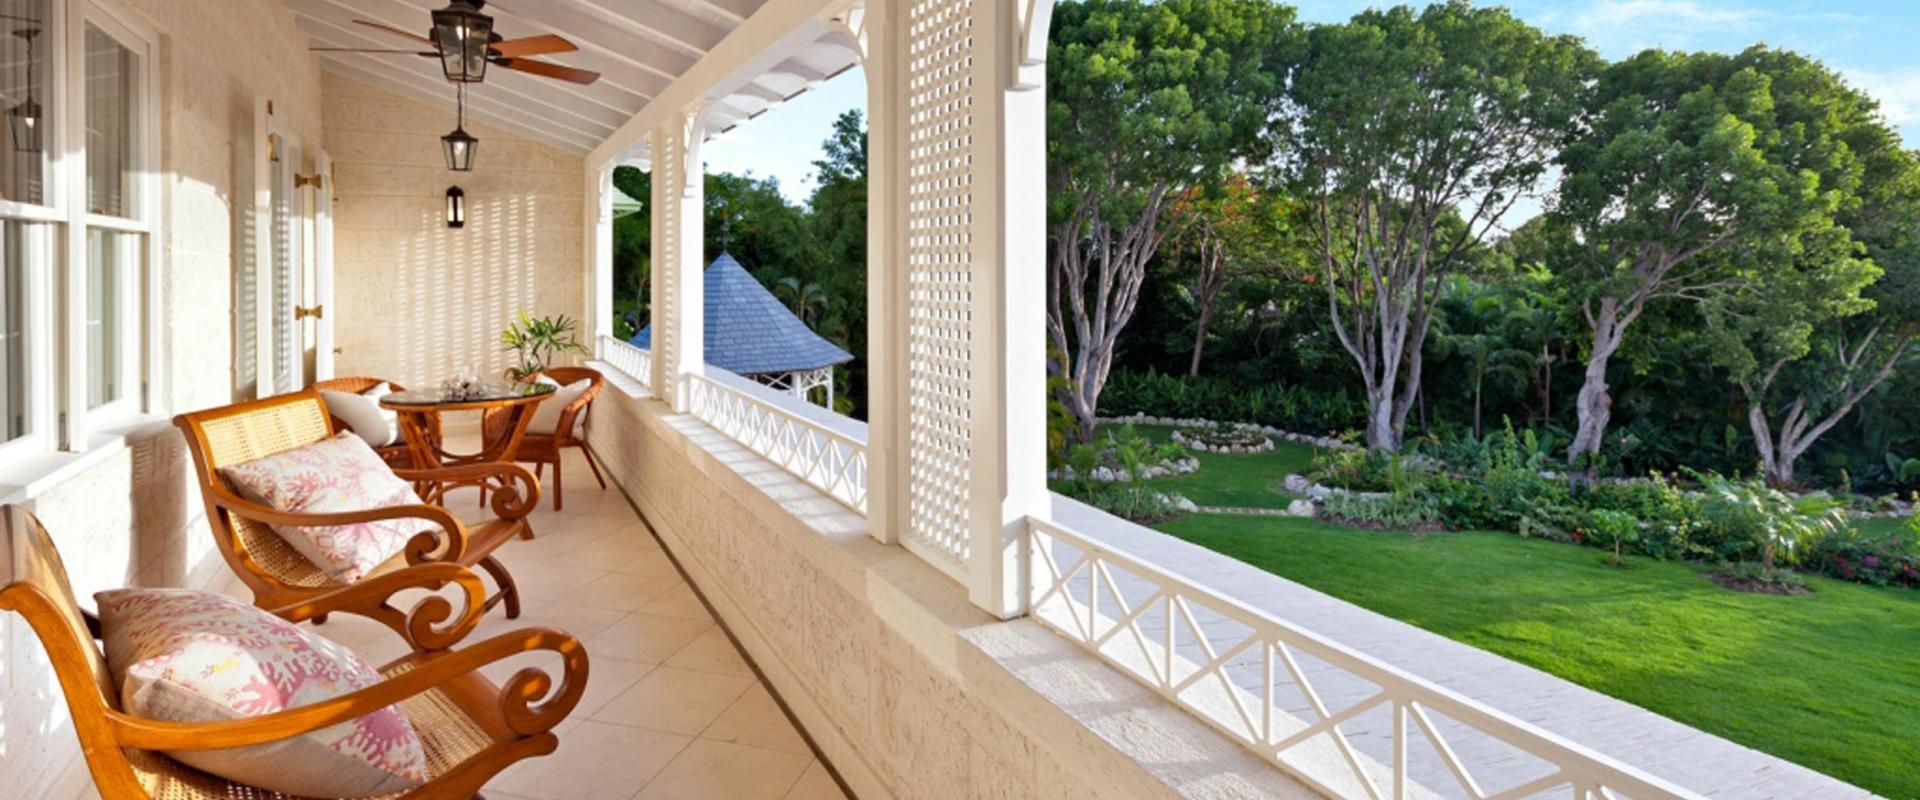 Sandy Lane, Windward House/Villa For Rent in Barbados